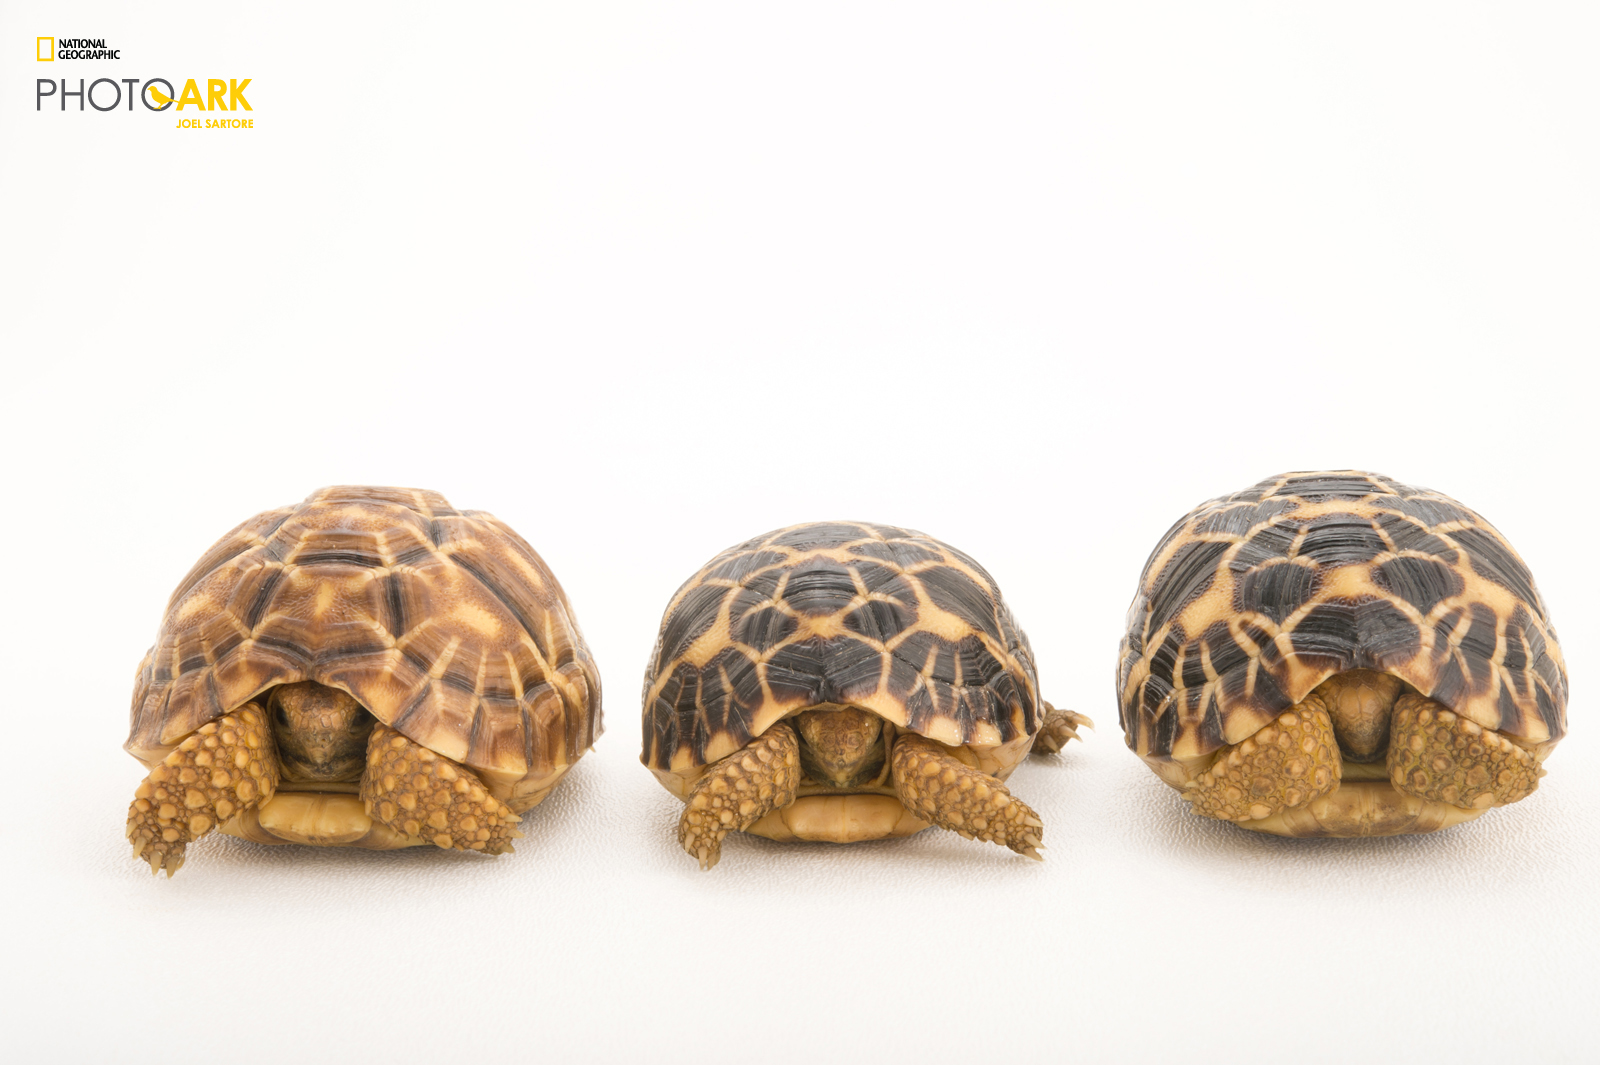 Three Burmese star tortoises from Joel Sartore's Photo Ark project